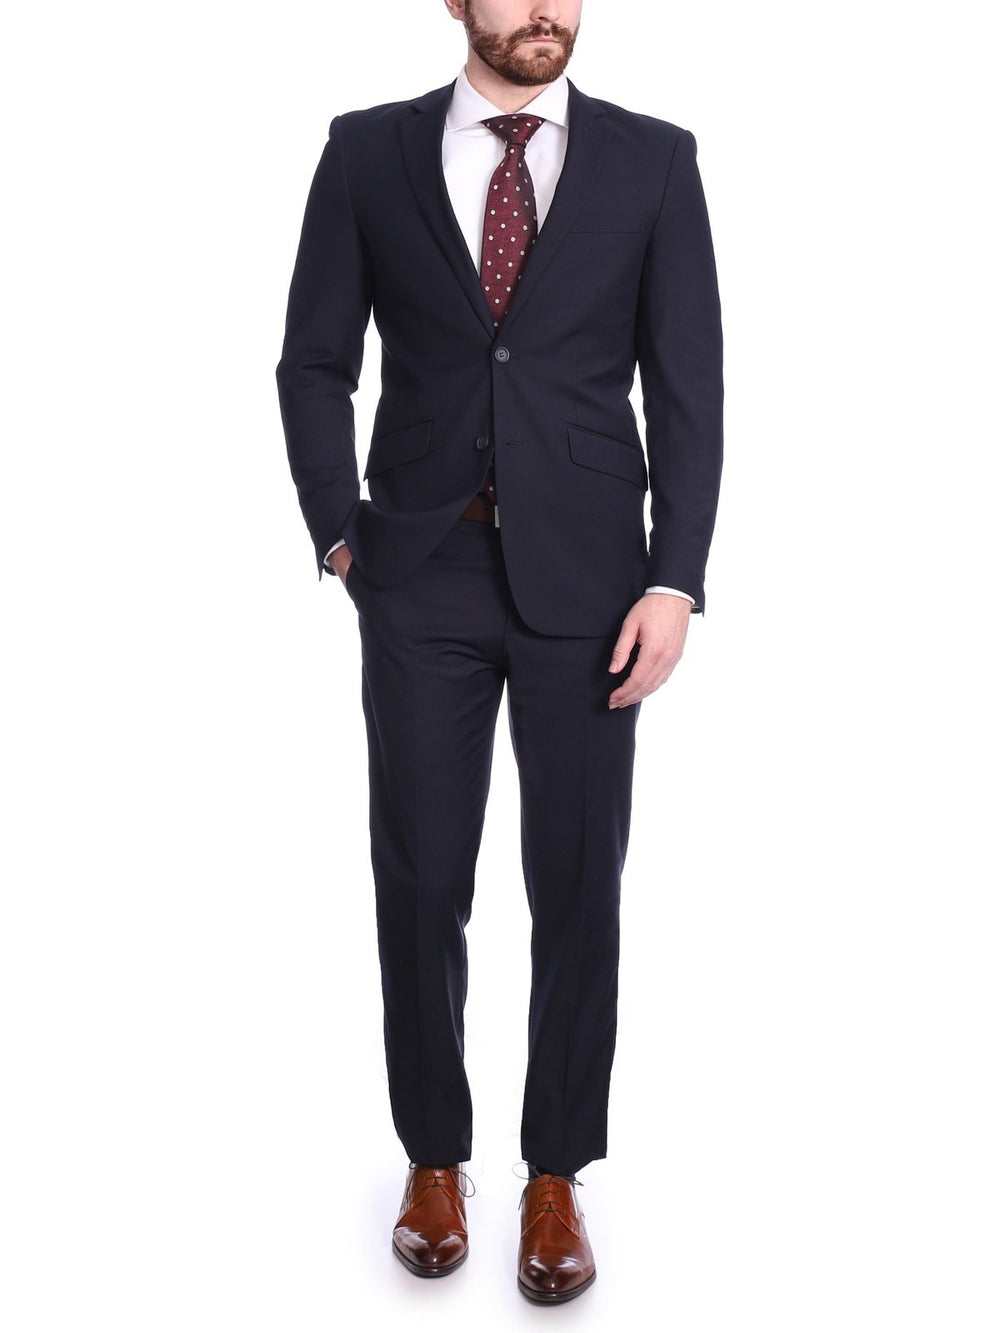 Best Store For Men's Designer Suits For Sale Online | The Suit Depot